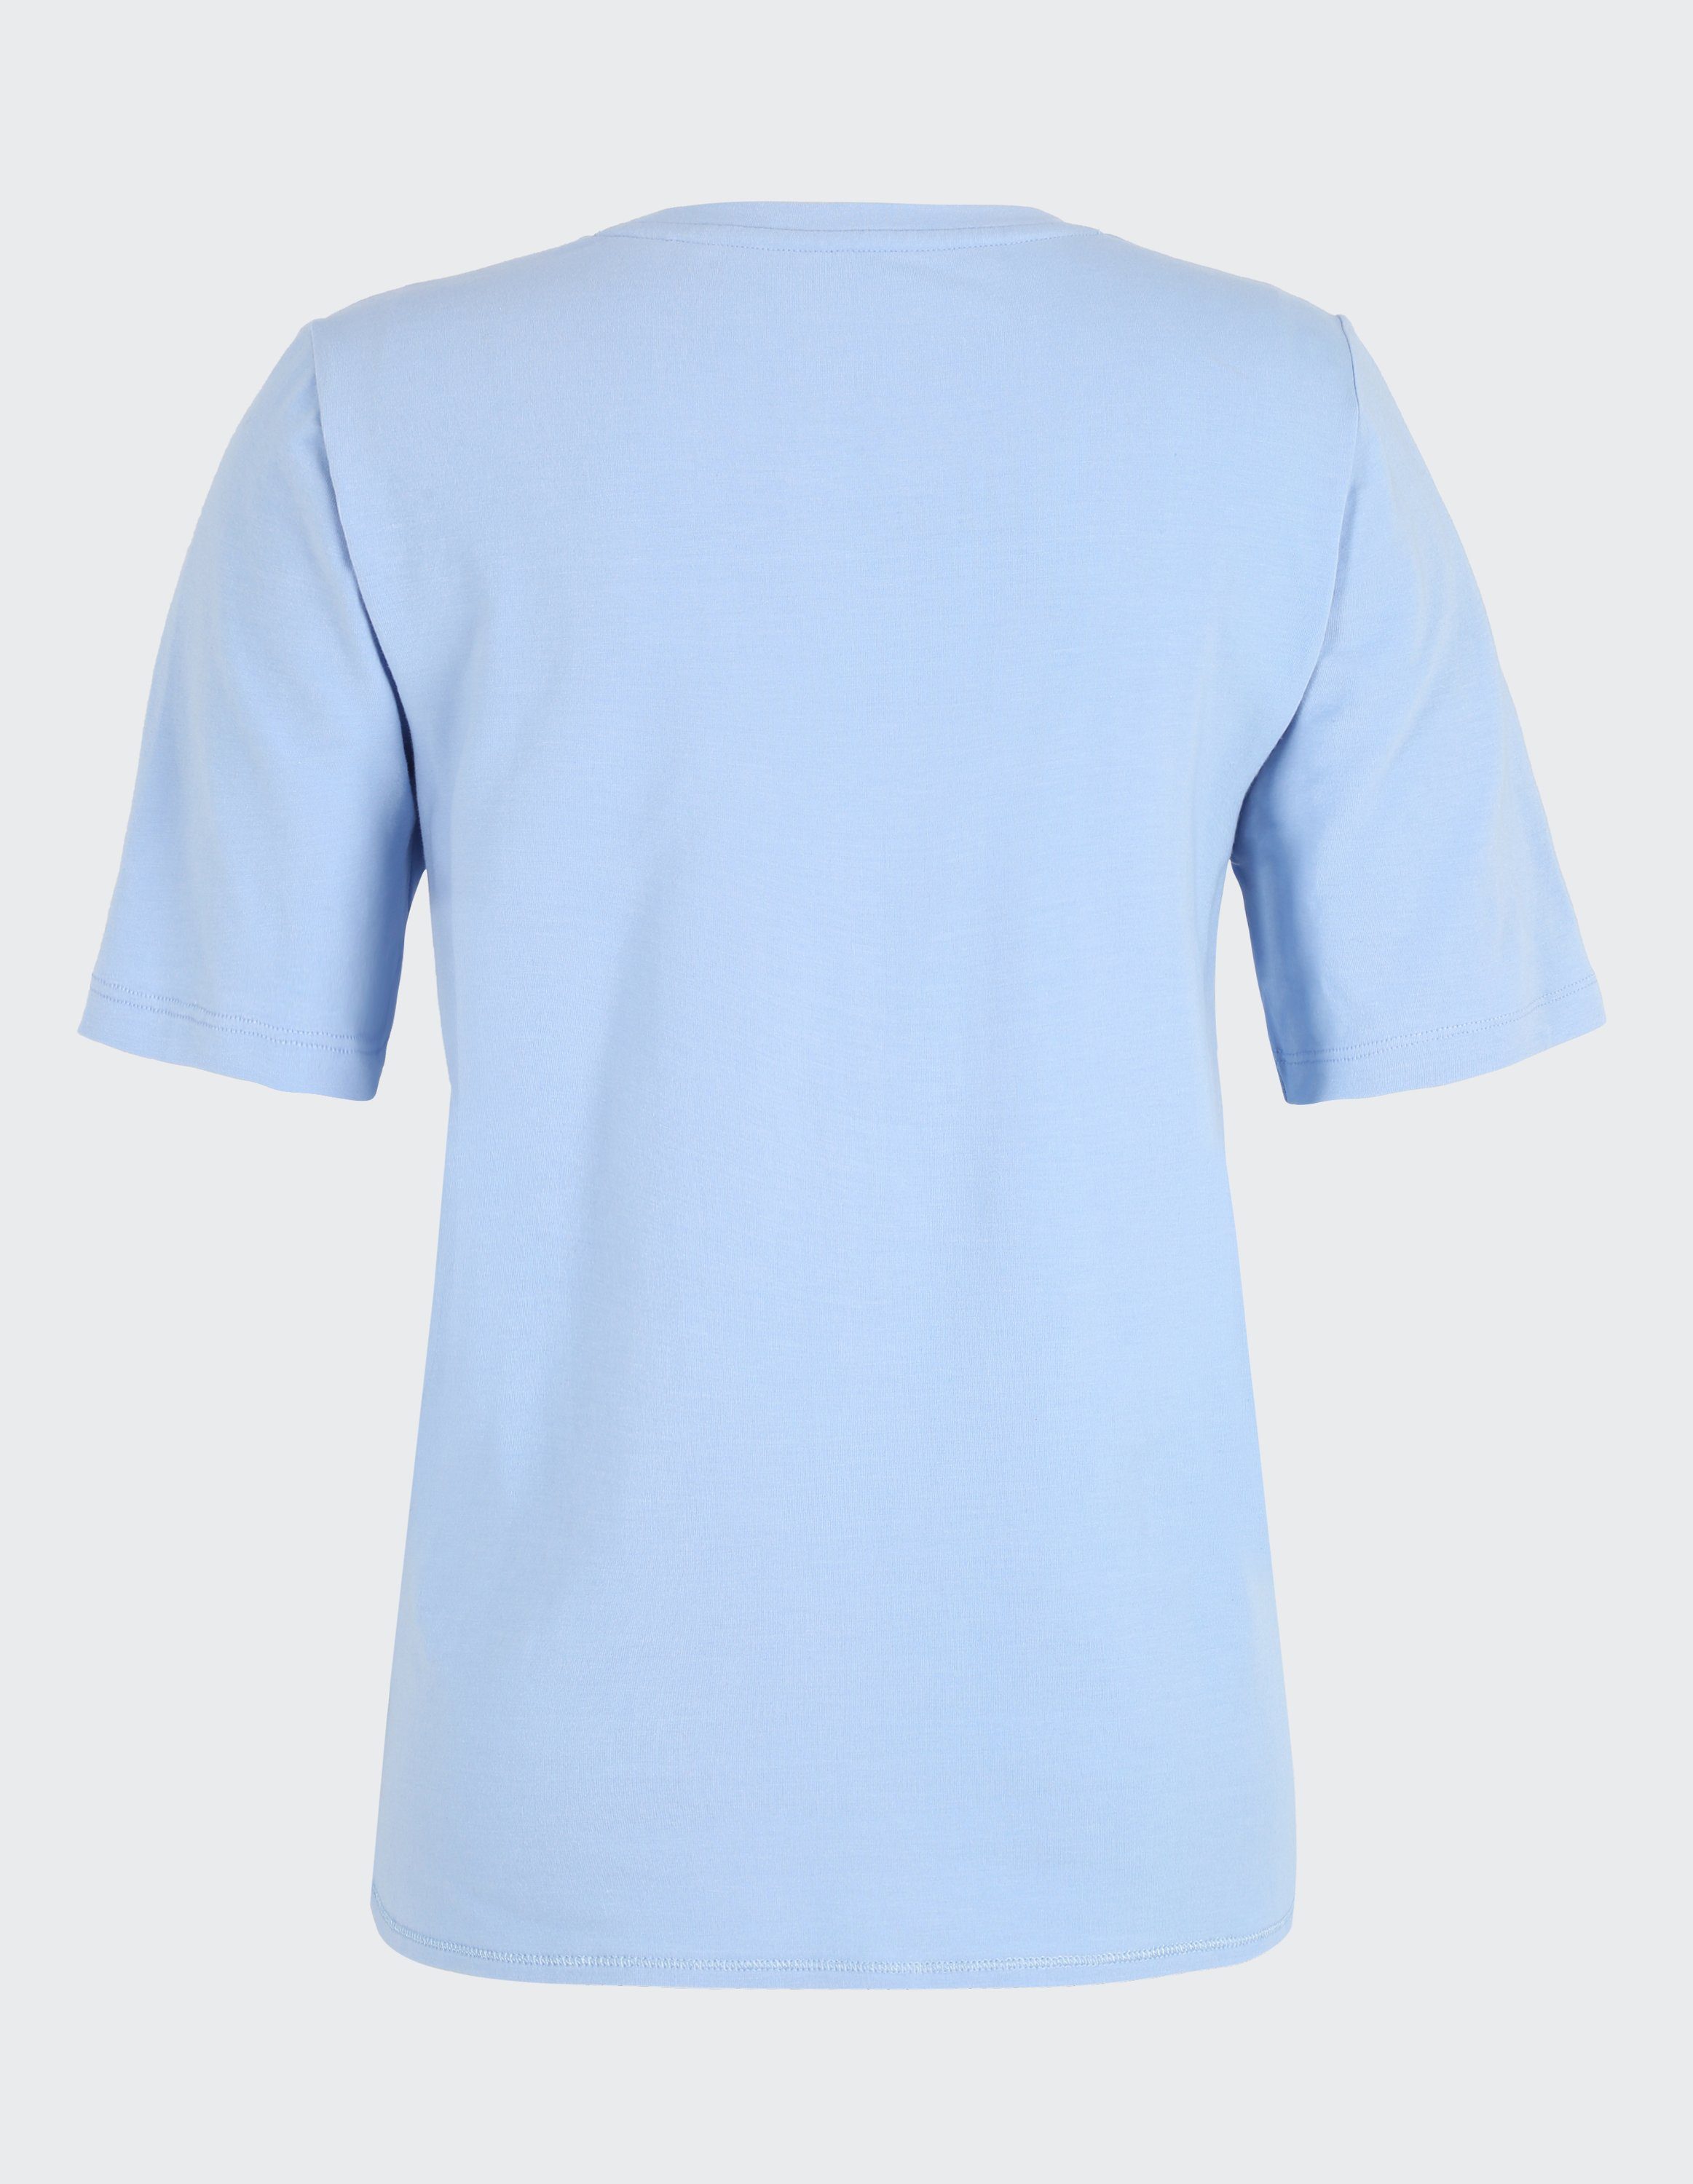 T-Shirt T-Shirt Sportswear blue Joy LUZIE serenity